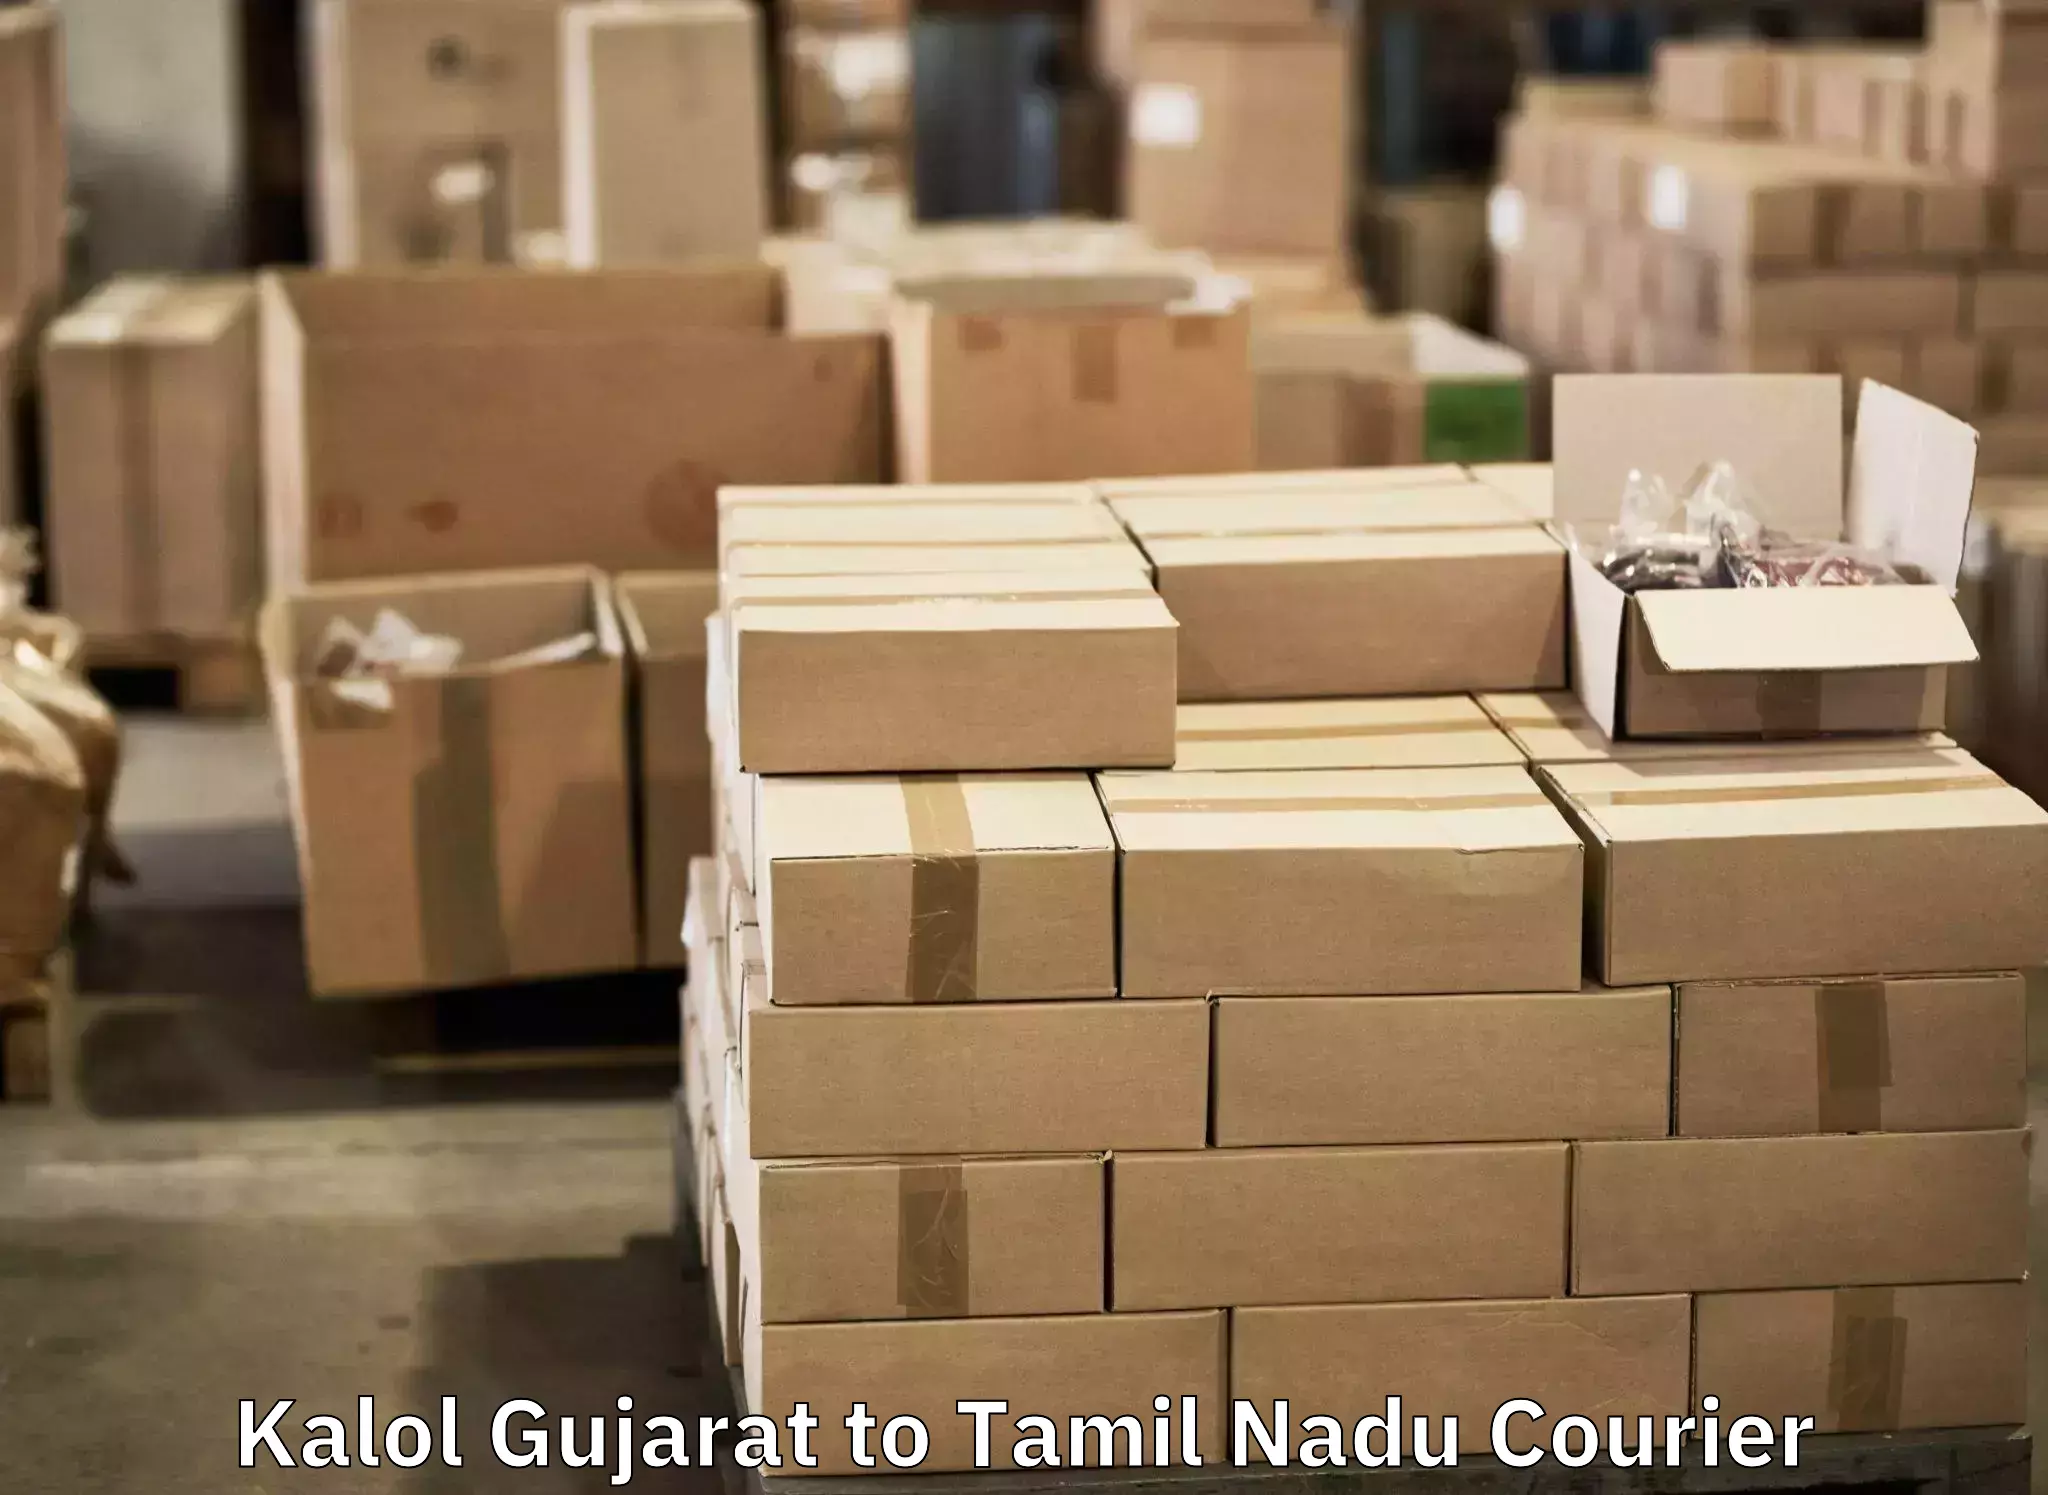 Emergency baggage service Kalol Gujarat to Villupuram